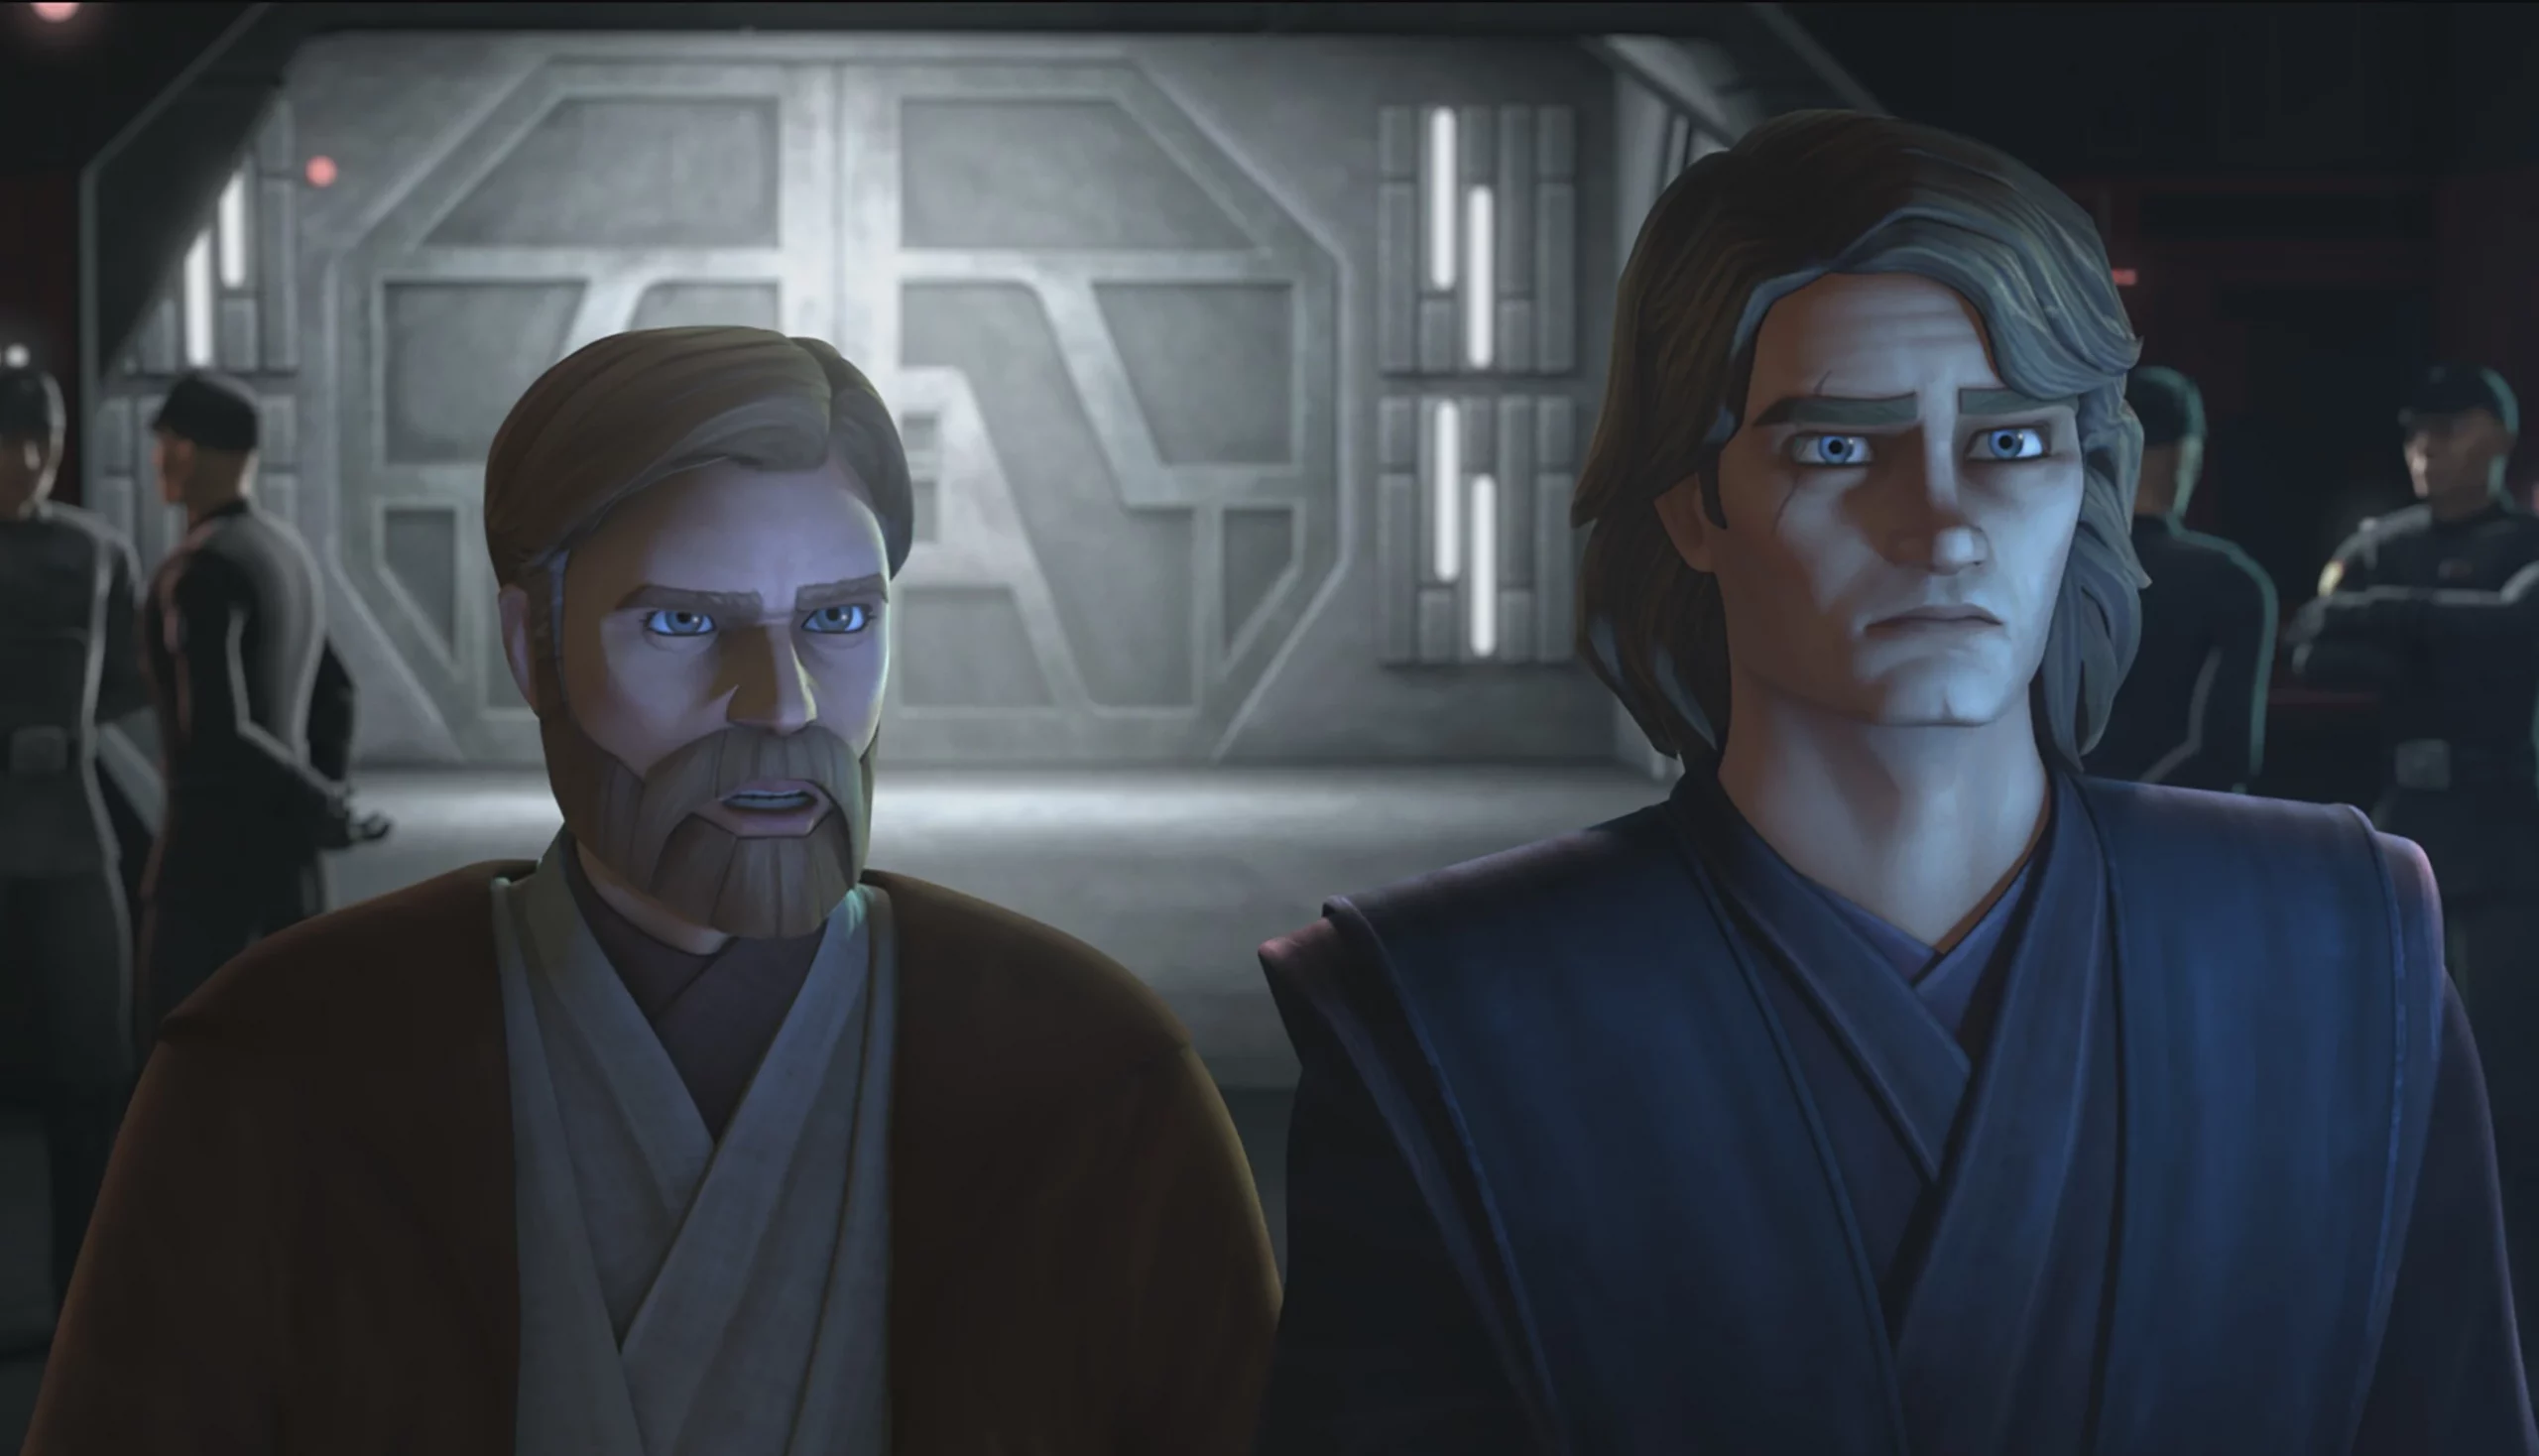 Obi-Wan and Anakin in The Clone Wars